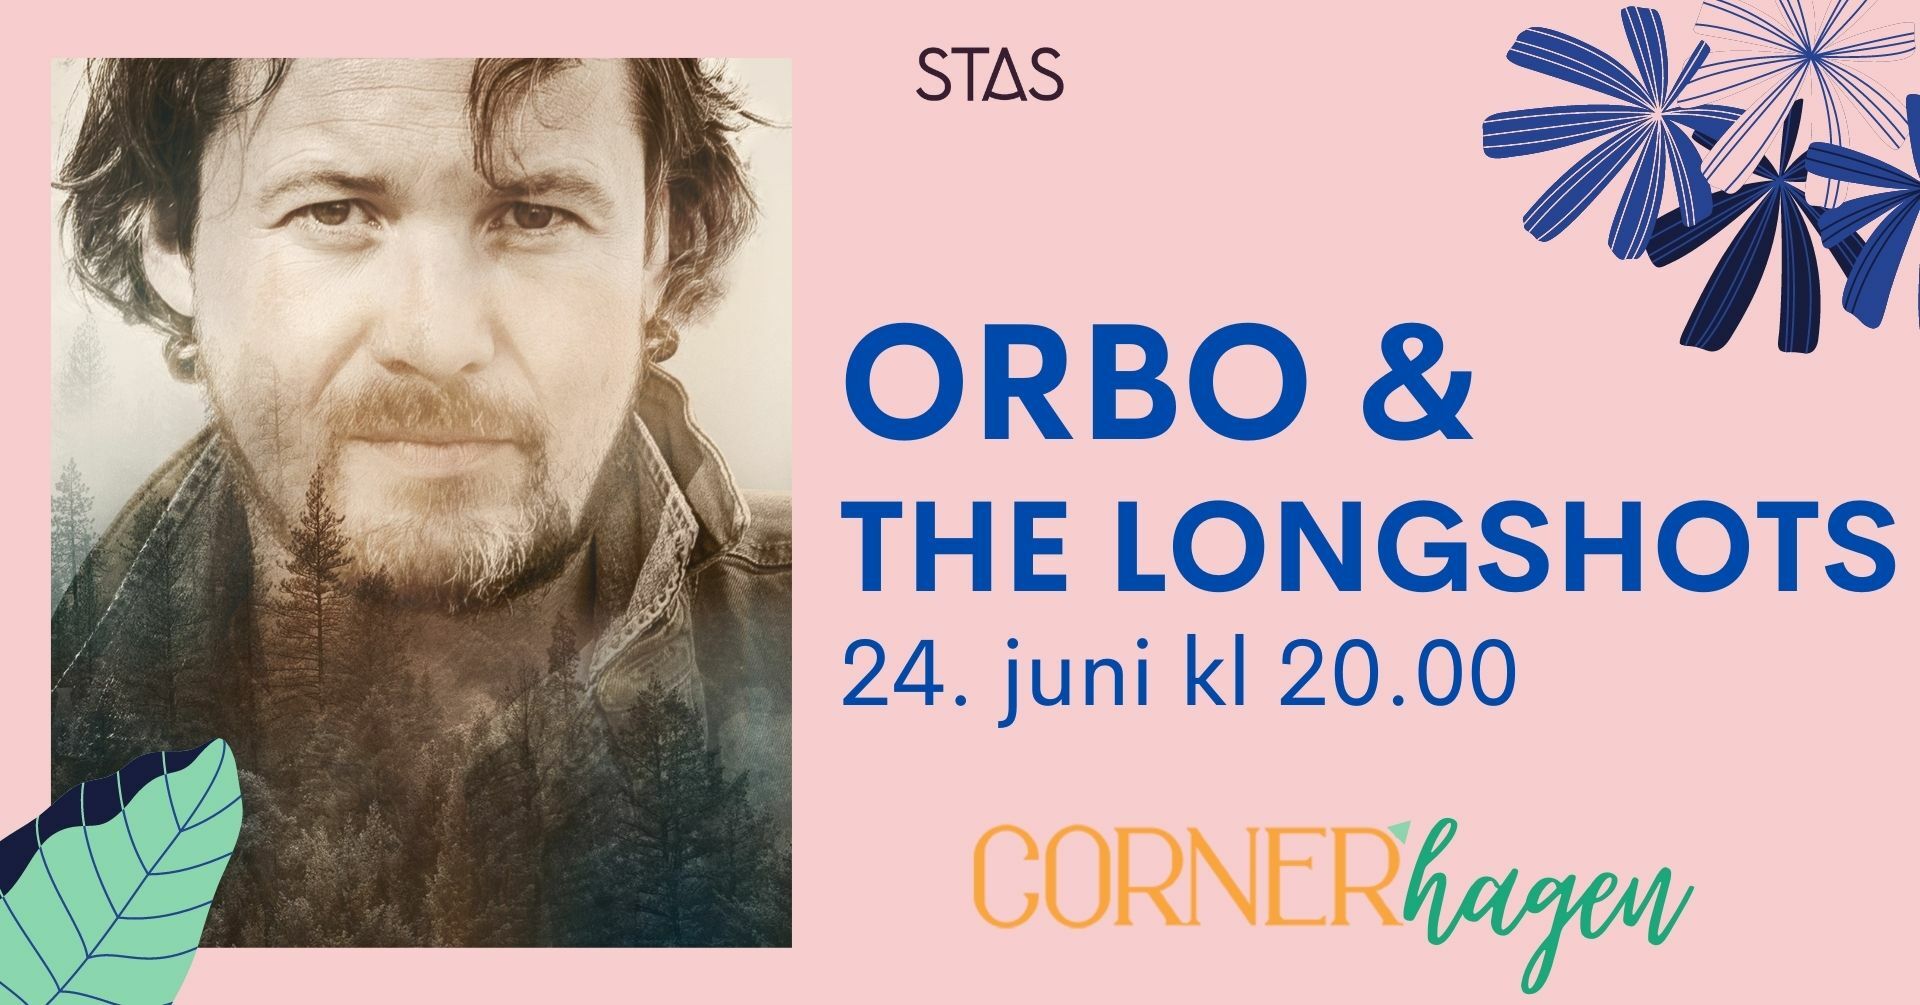 ORBO & The Longshots  - Stas Artist 